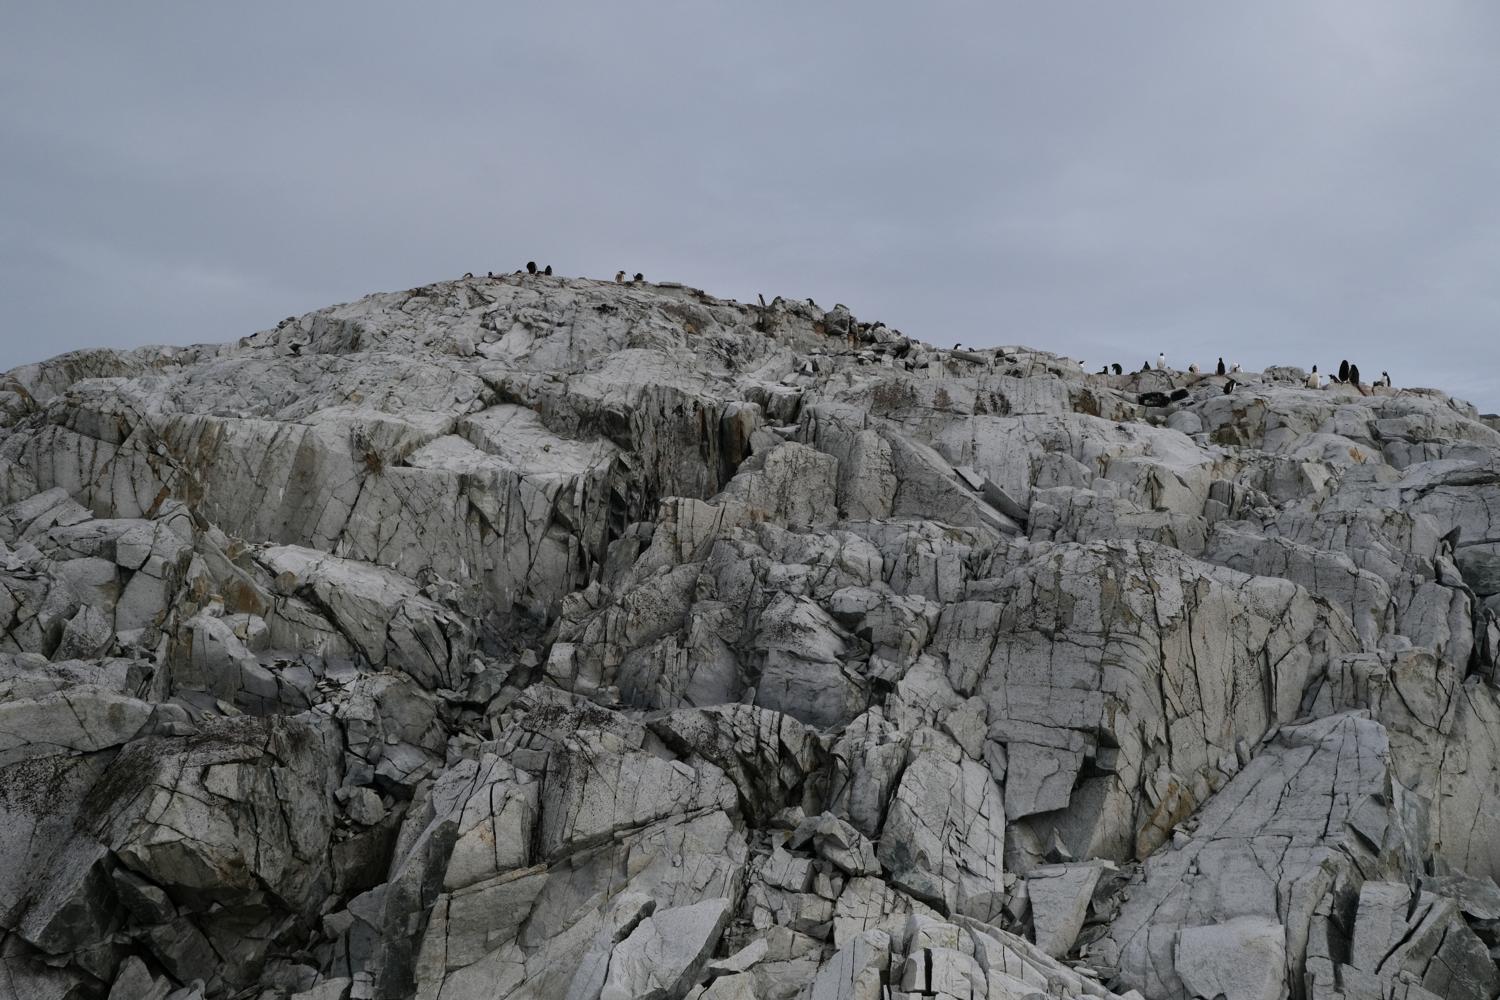 Penguins on the Rocks